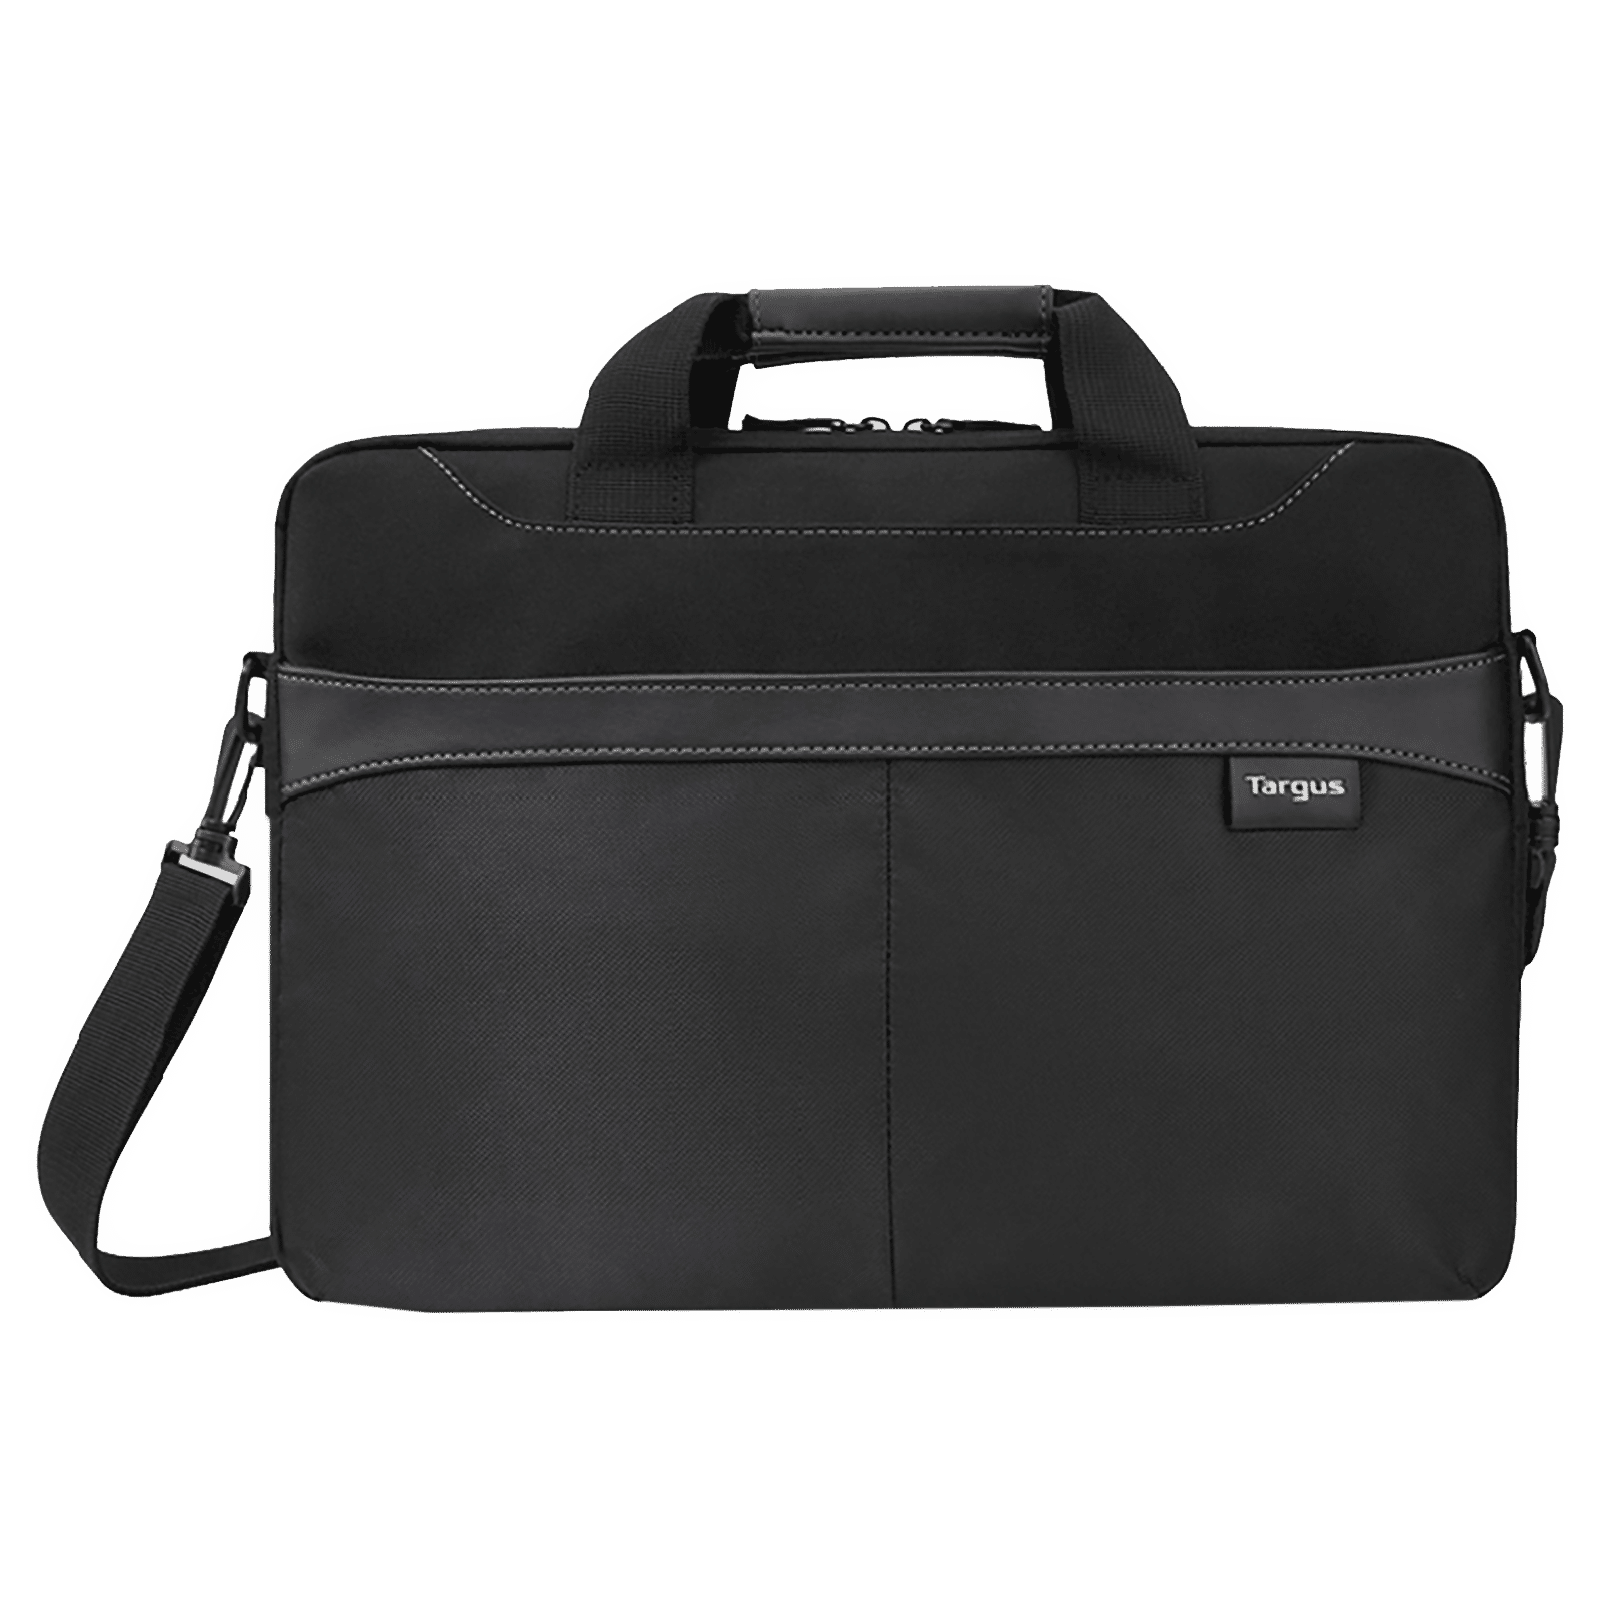 SLING PRO MESSENGER BAG — KRIEGA USA | Official Online Store for America